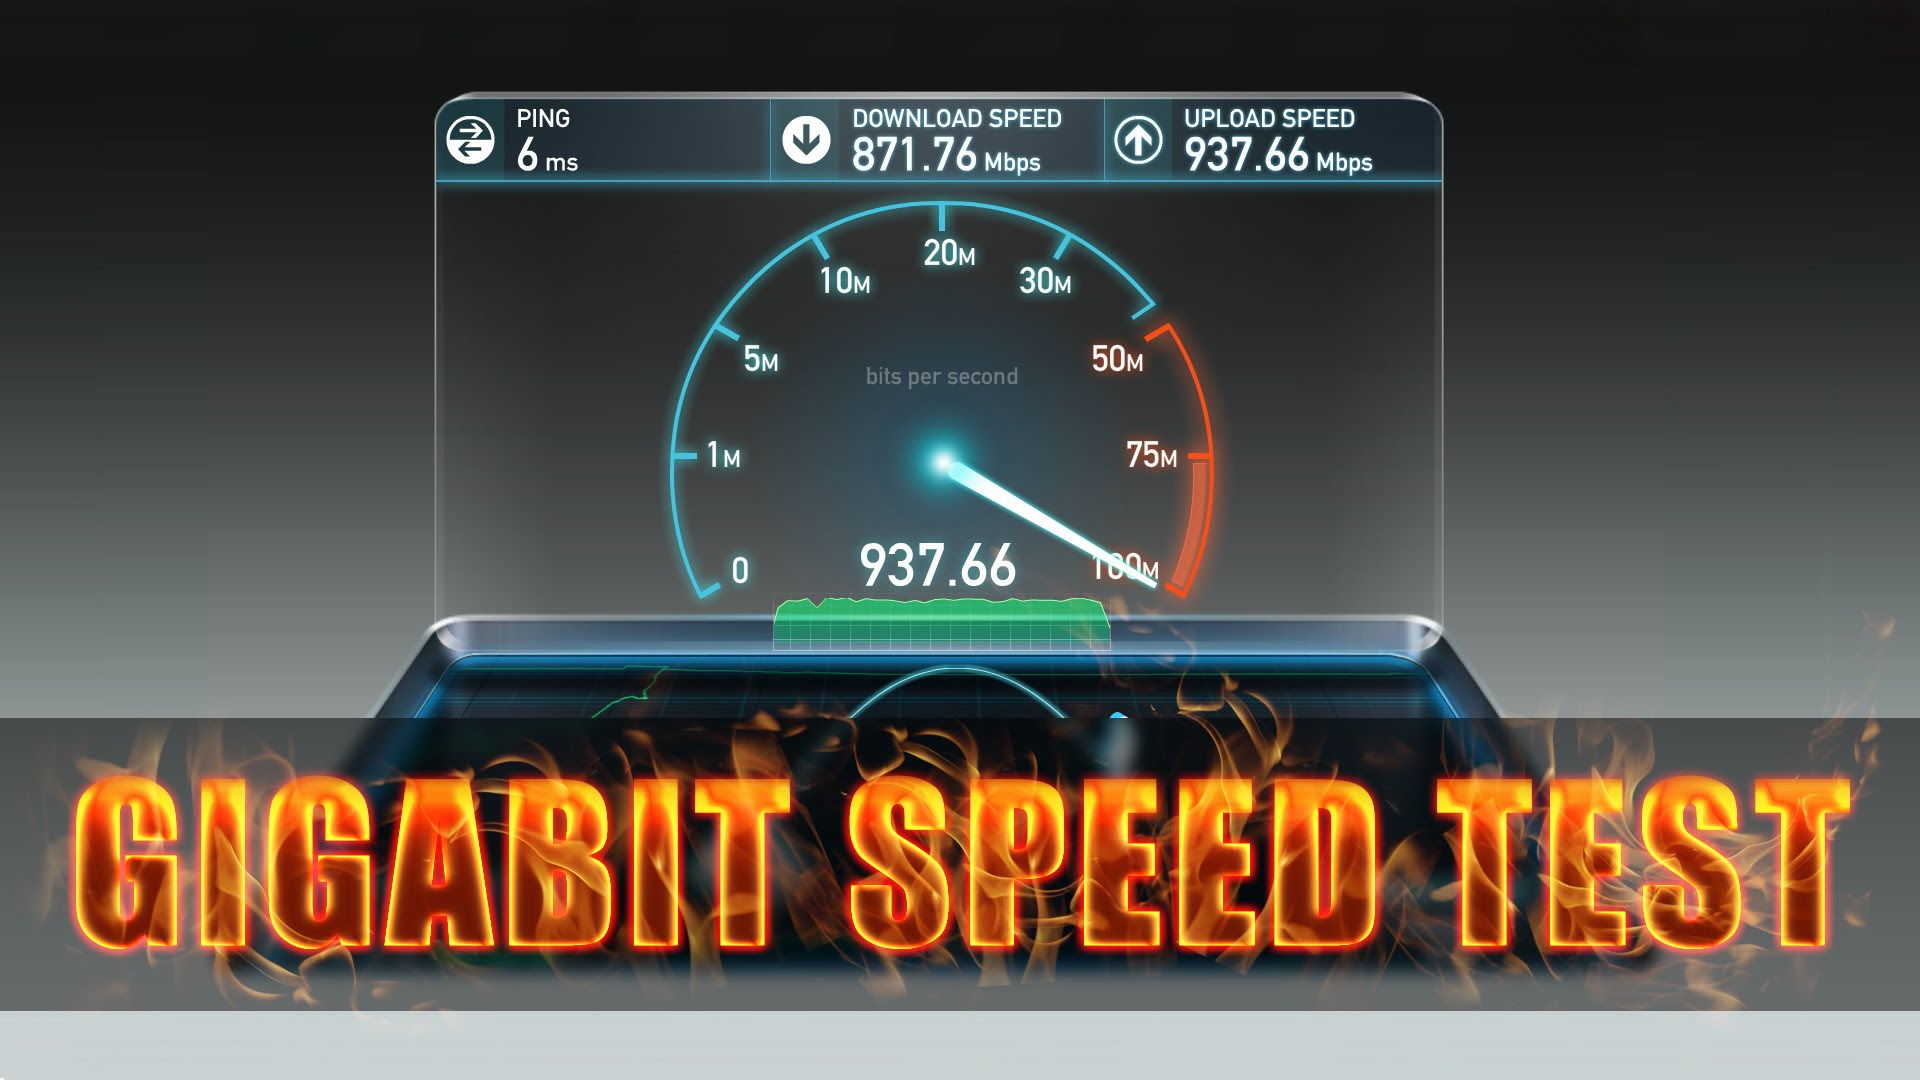 Тест интернет спеед. Гигабит скорость. Гигабитный интернет Speedtest. Upload Speed.